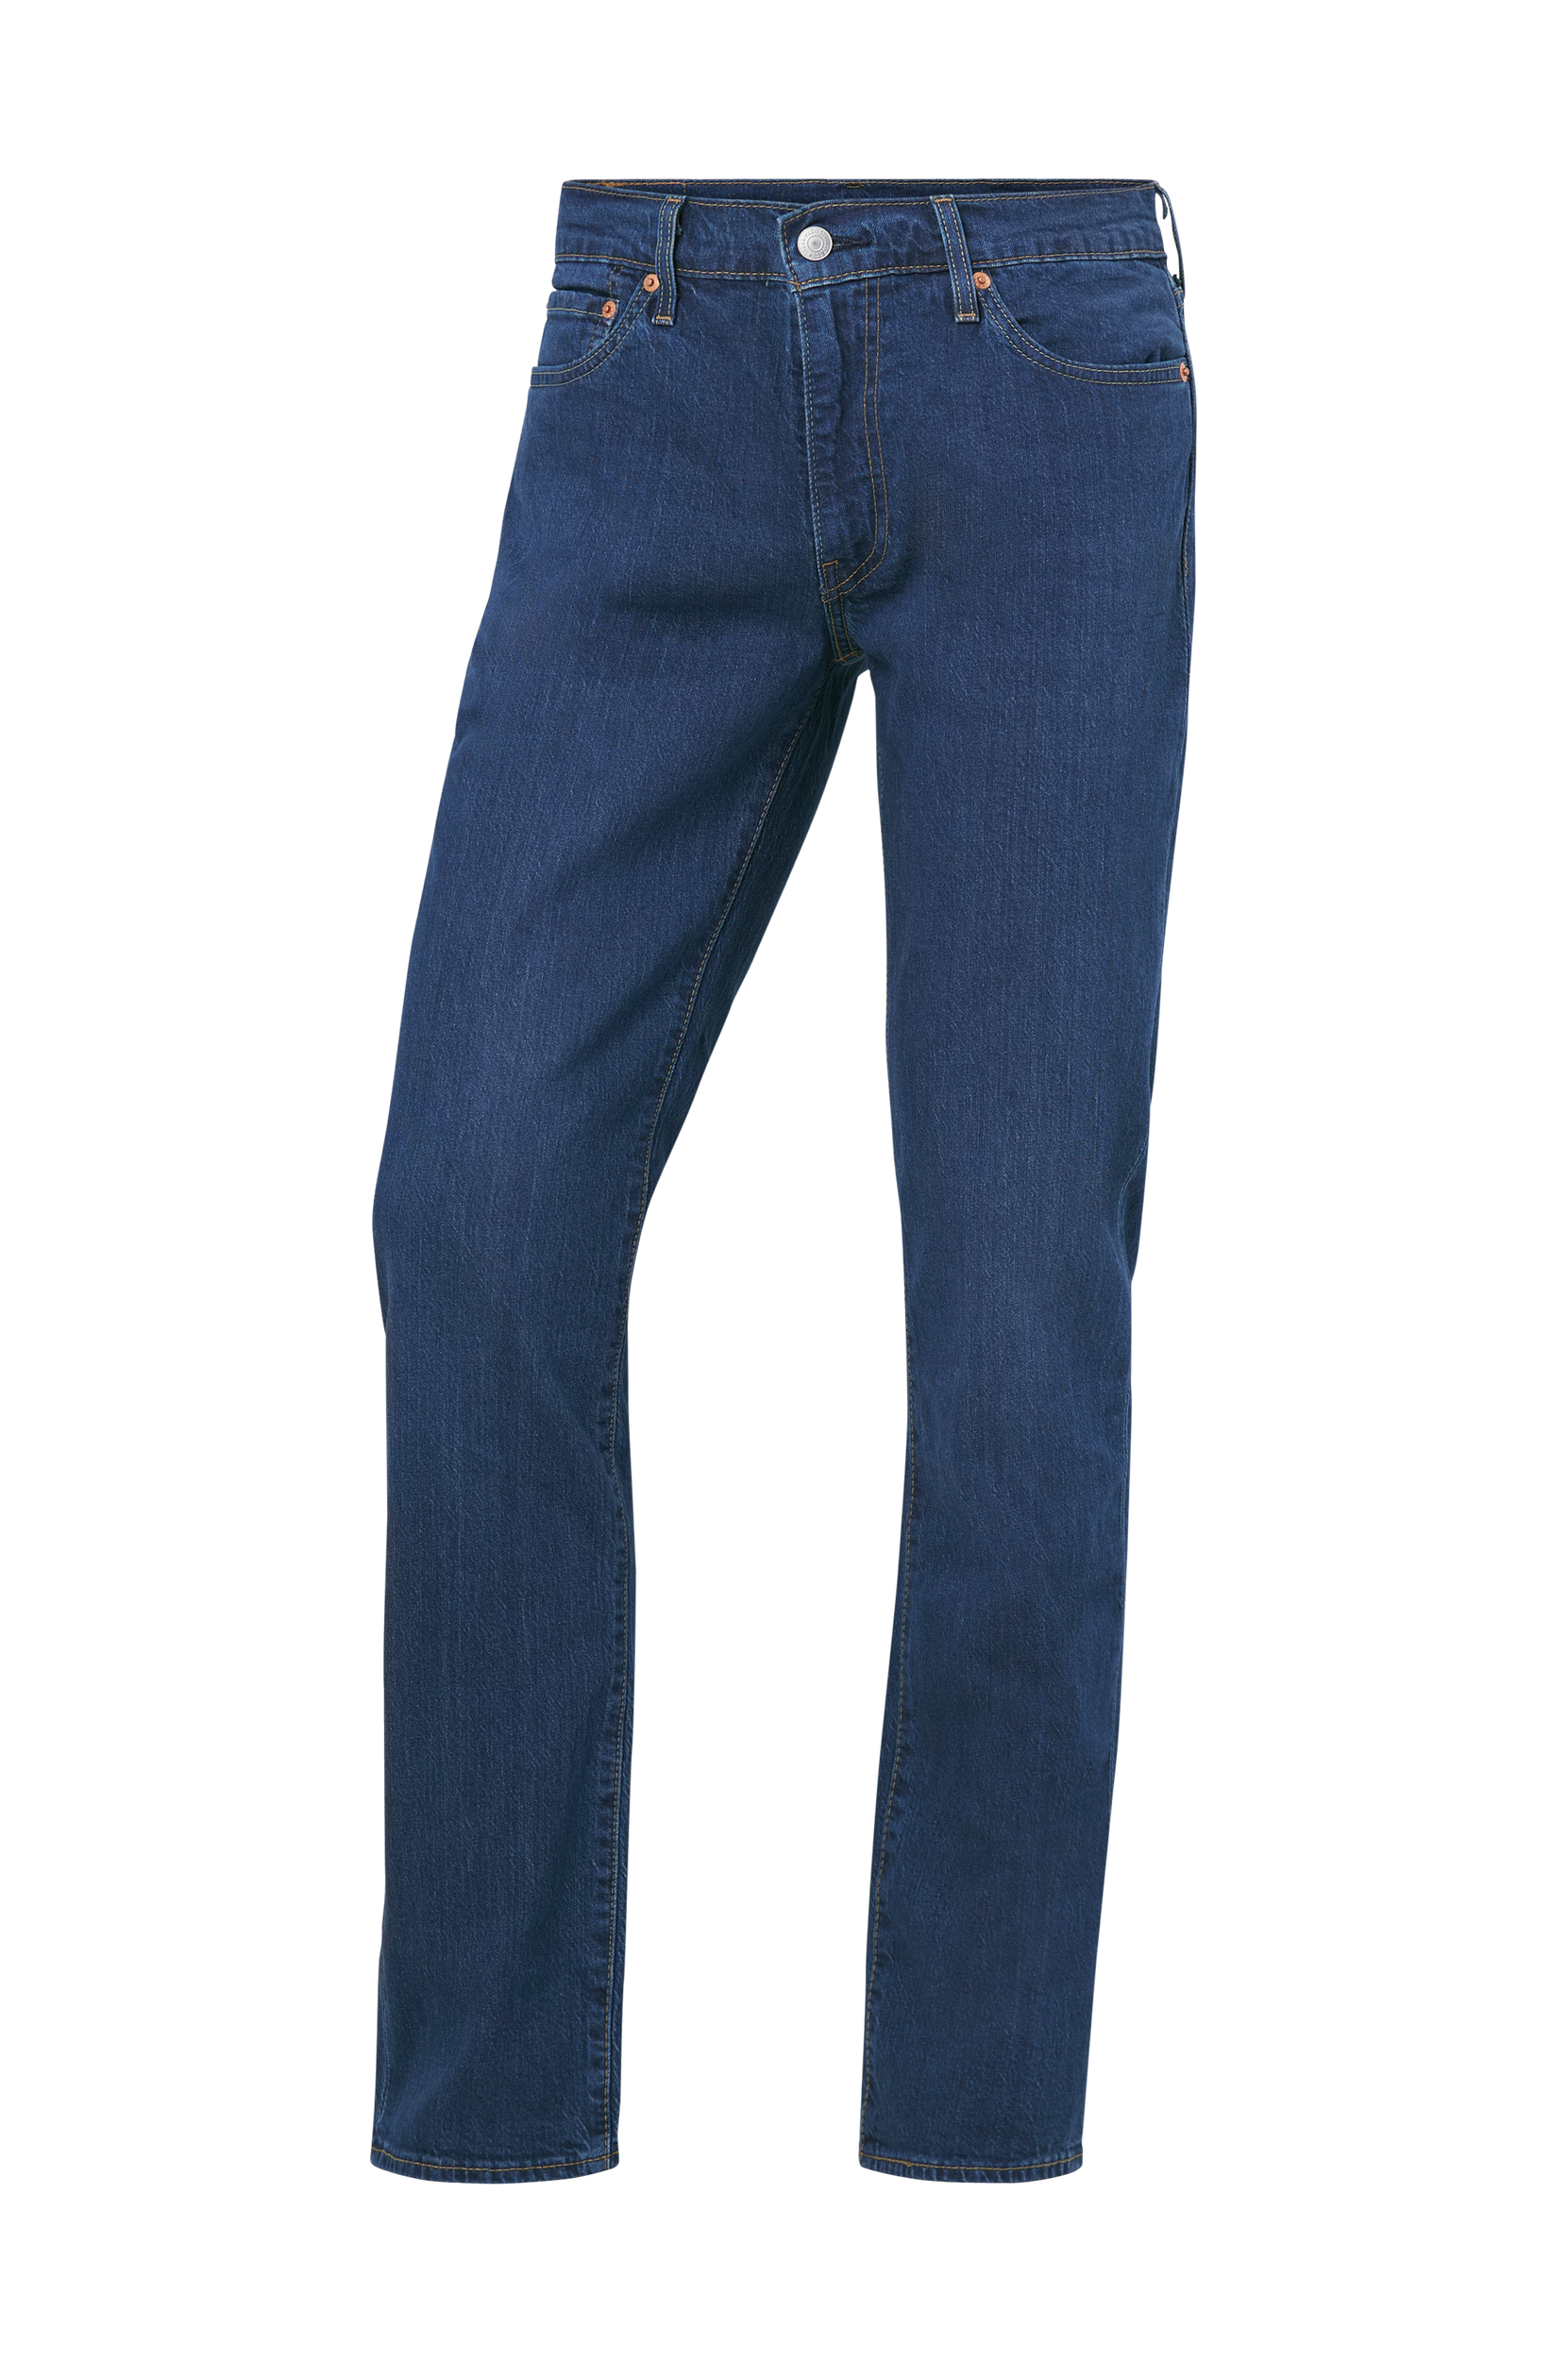 Levi's - Jeans 511, slim fit - Blå - W31/L34